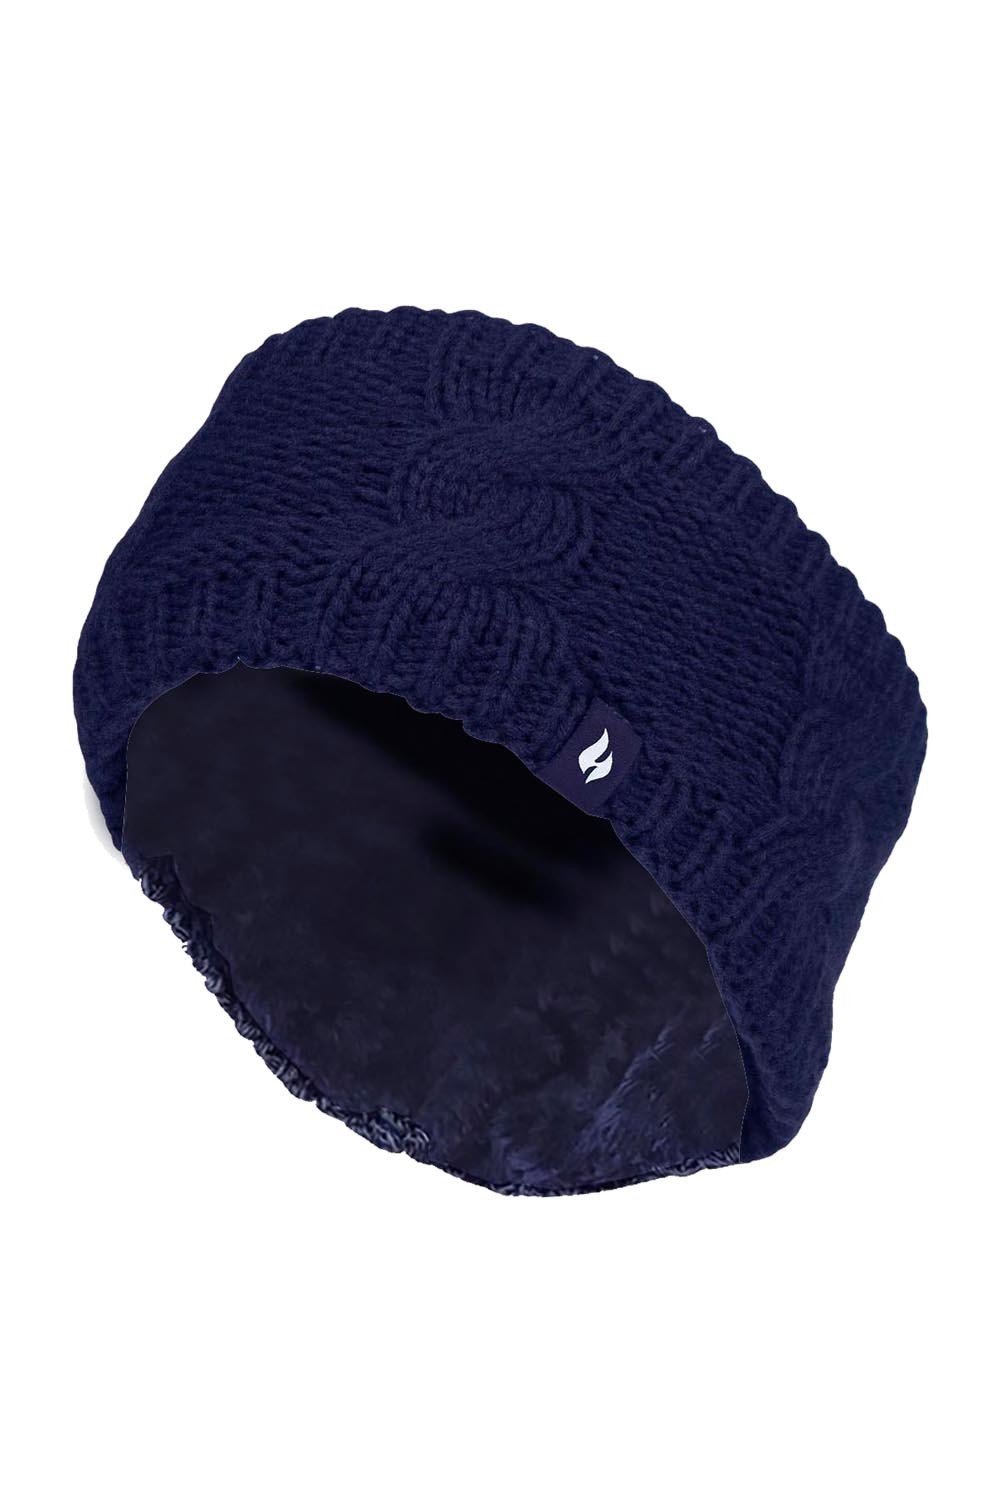 Womens Fleece Lined Thermal Ear Warmer Headband -